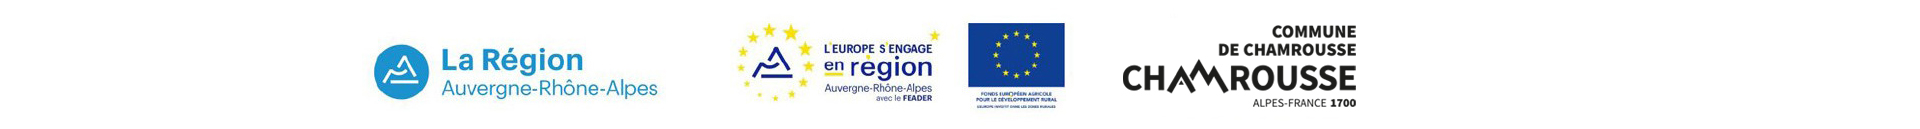 Chamrousse logos support institution house environment mountain resort summer grenoble isere french alps france - © DR